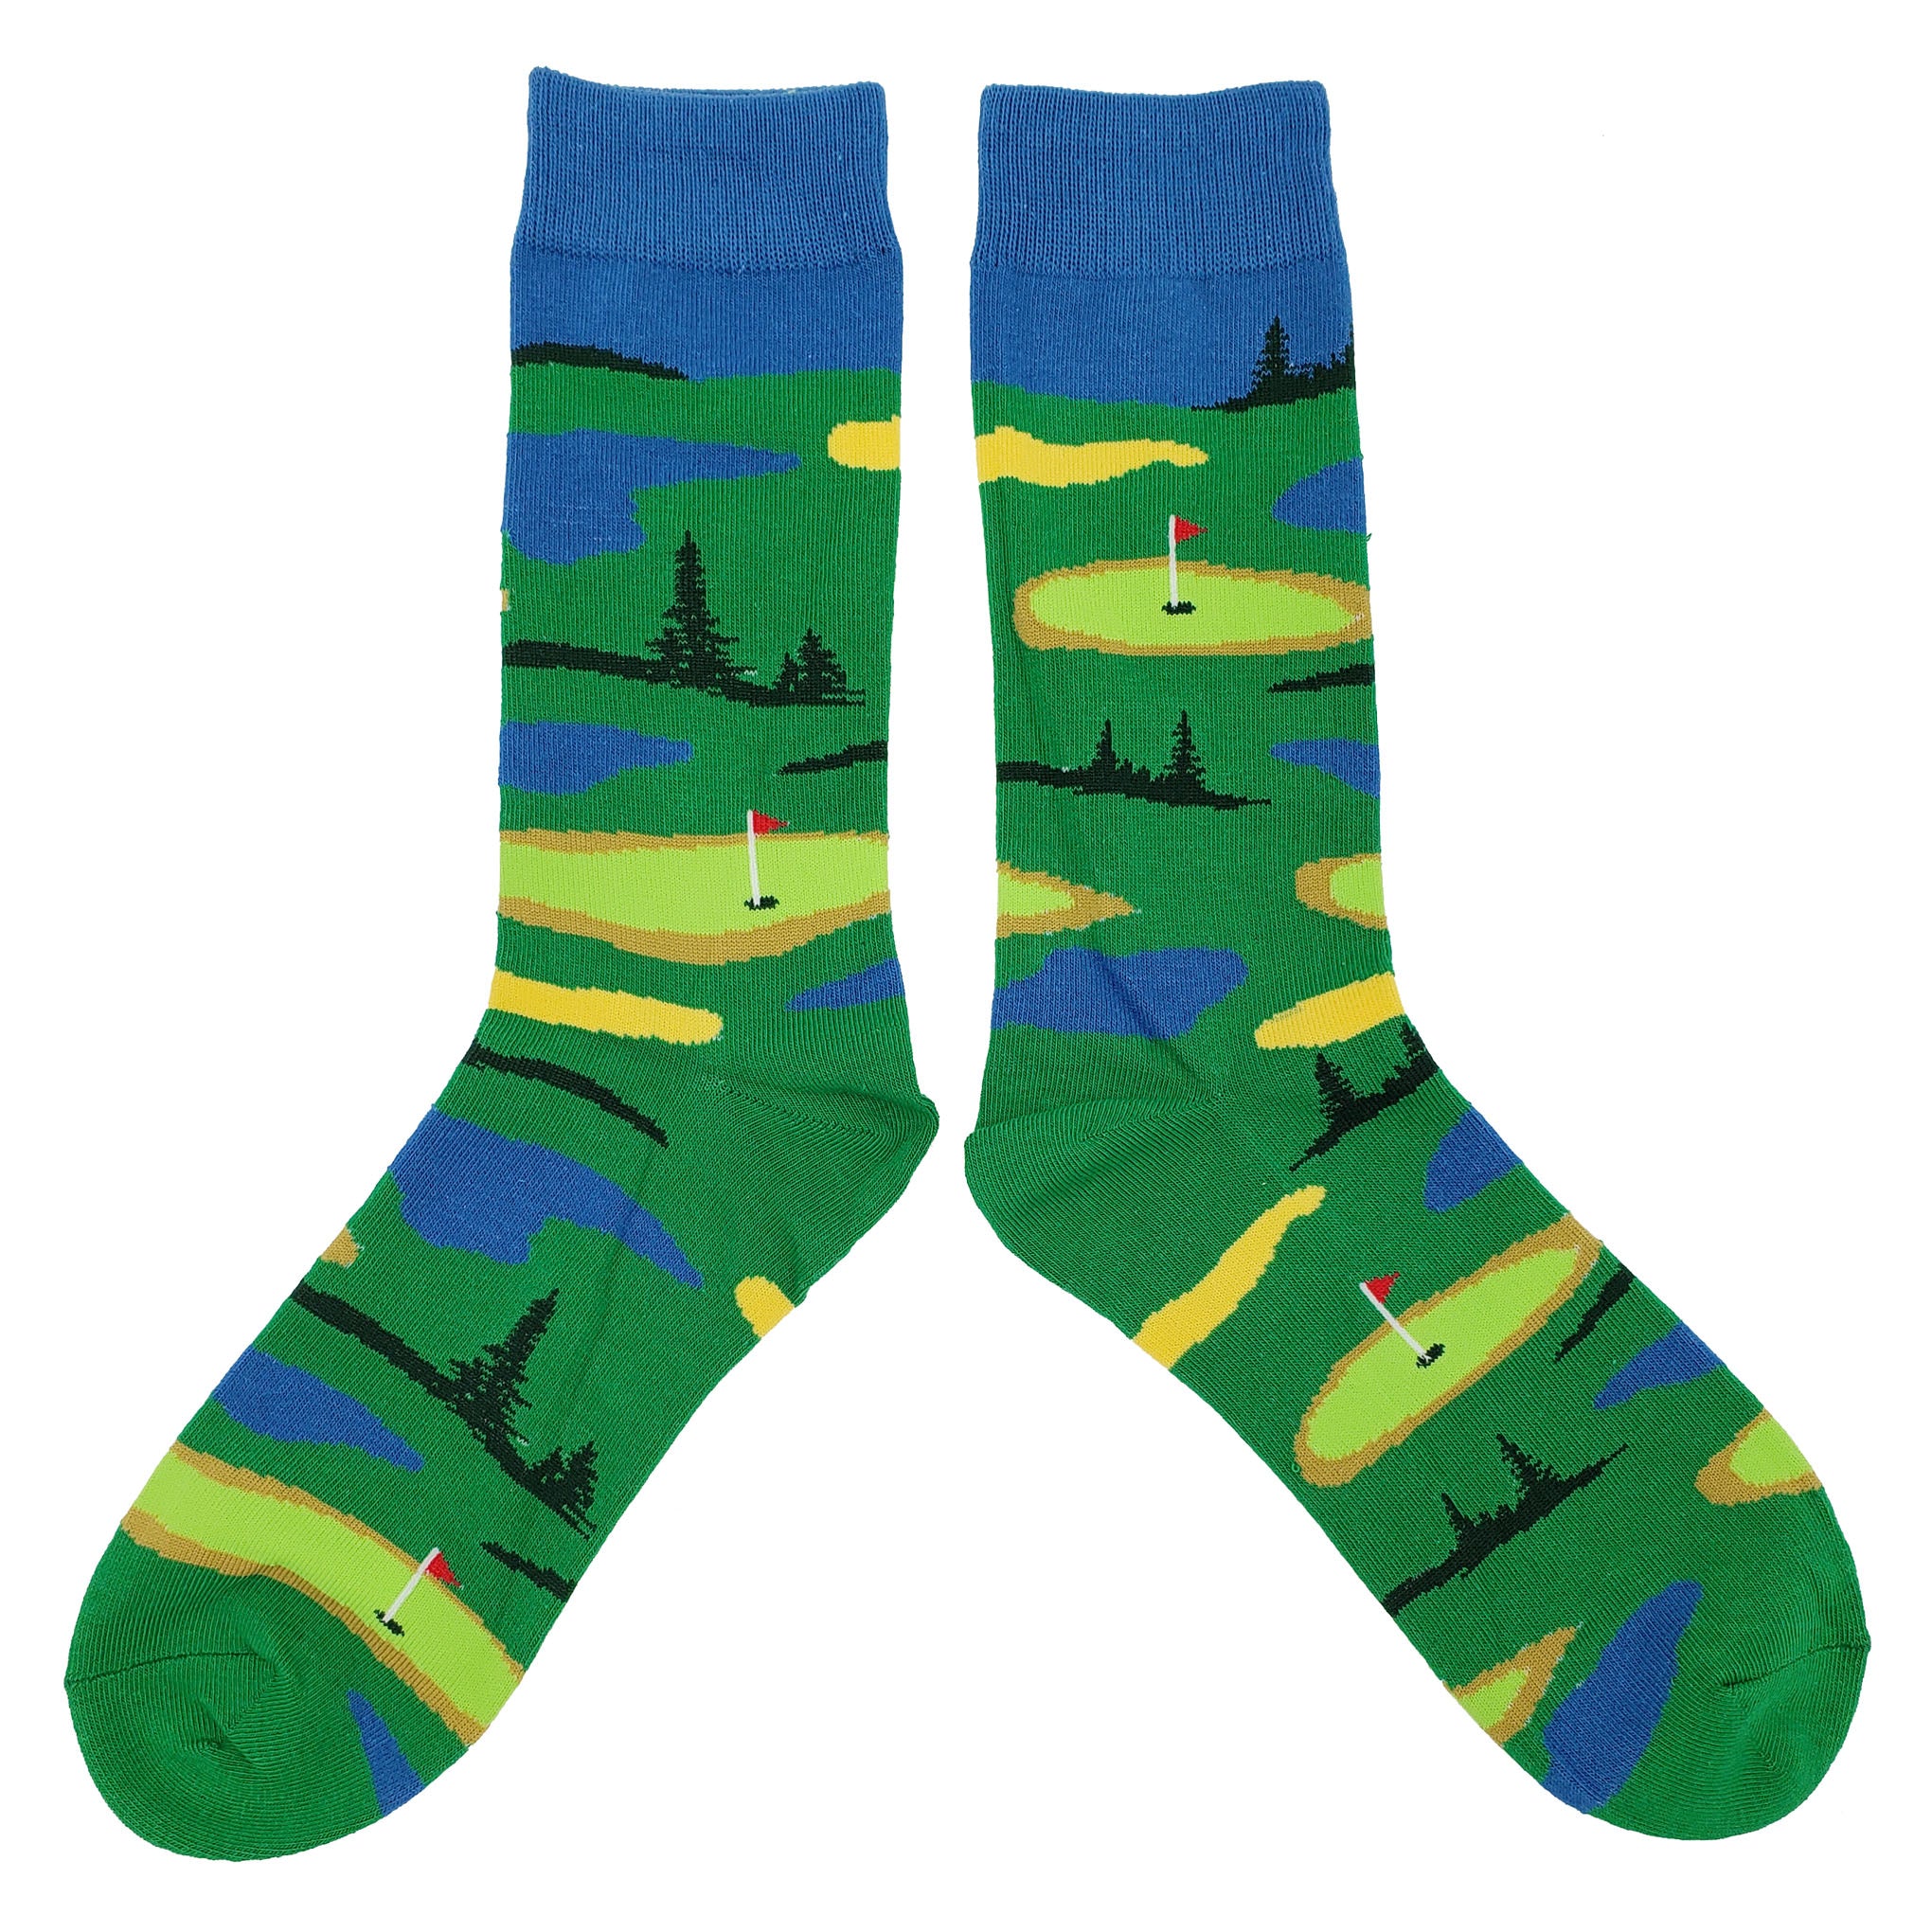 Golf Green Socks - Fun and Crazy Socks at Sockfly.com